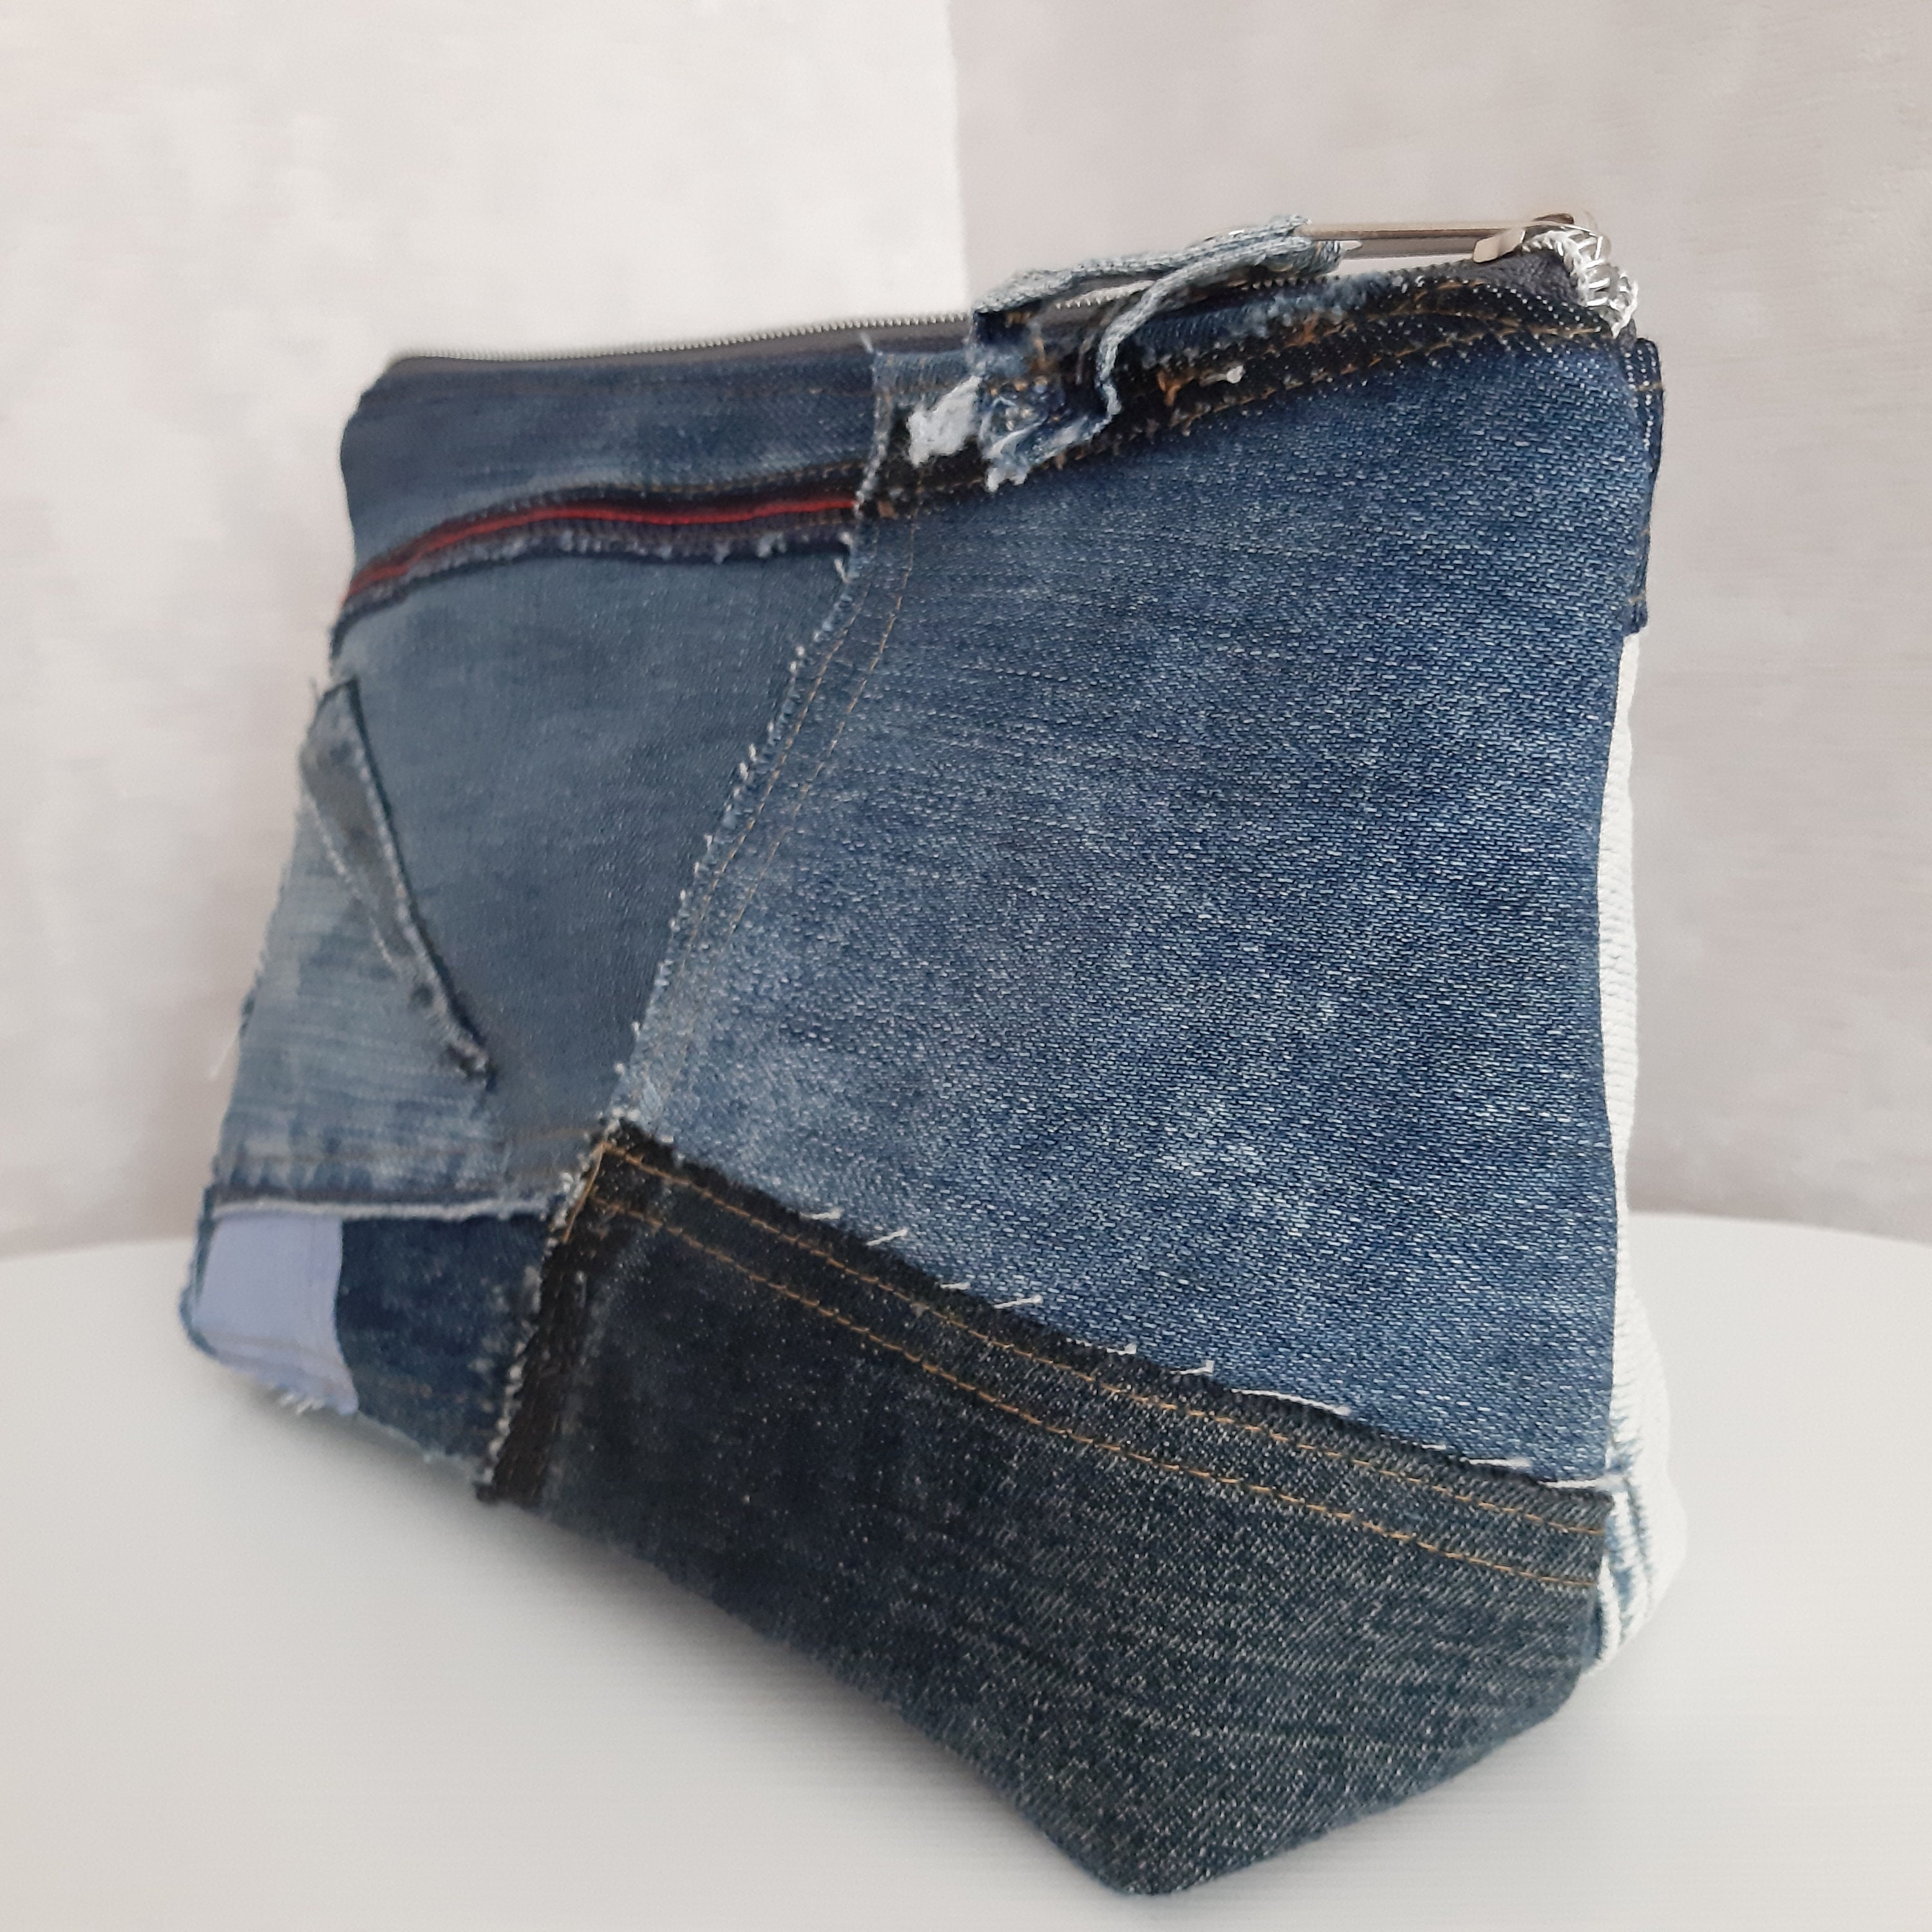 Boro denim cosmetic bag Travel organizer of jeans Casual | Etsy